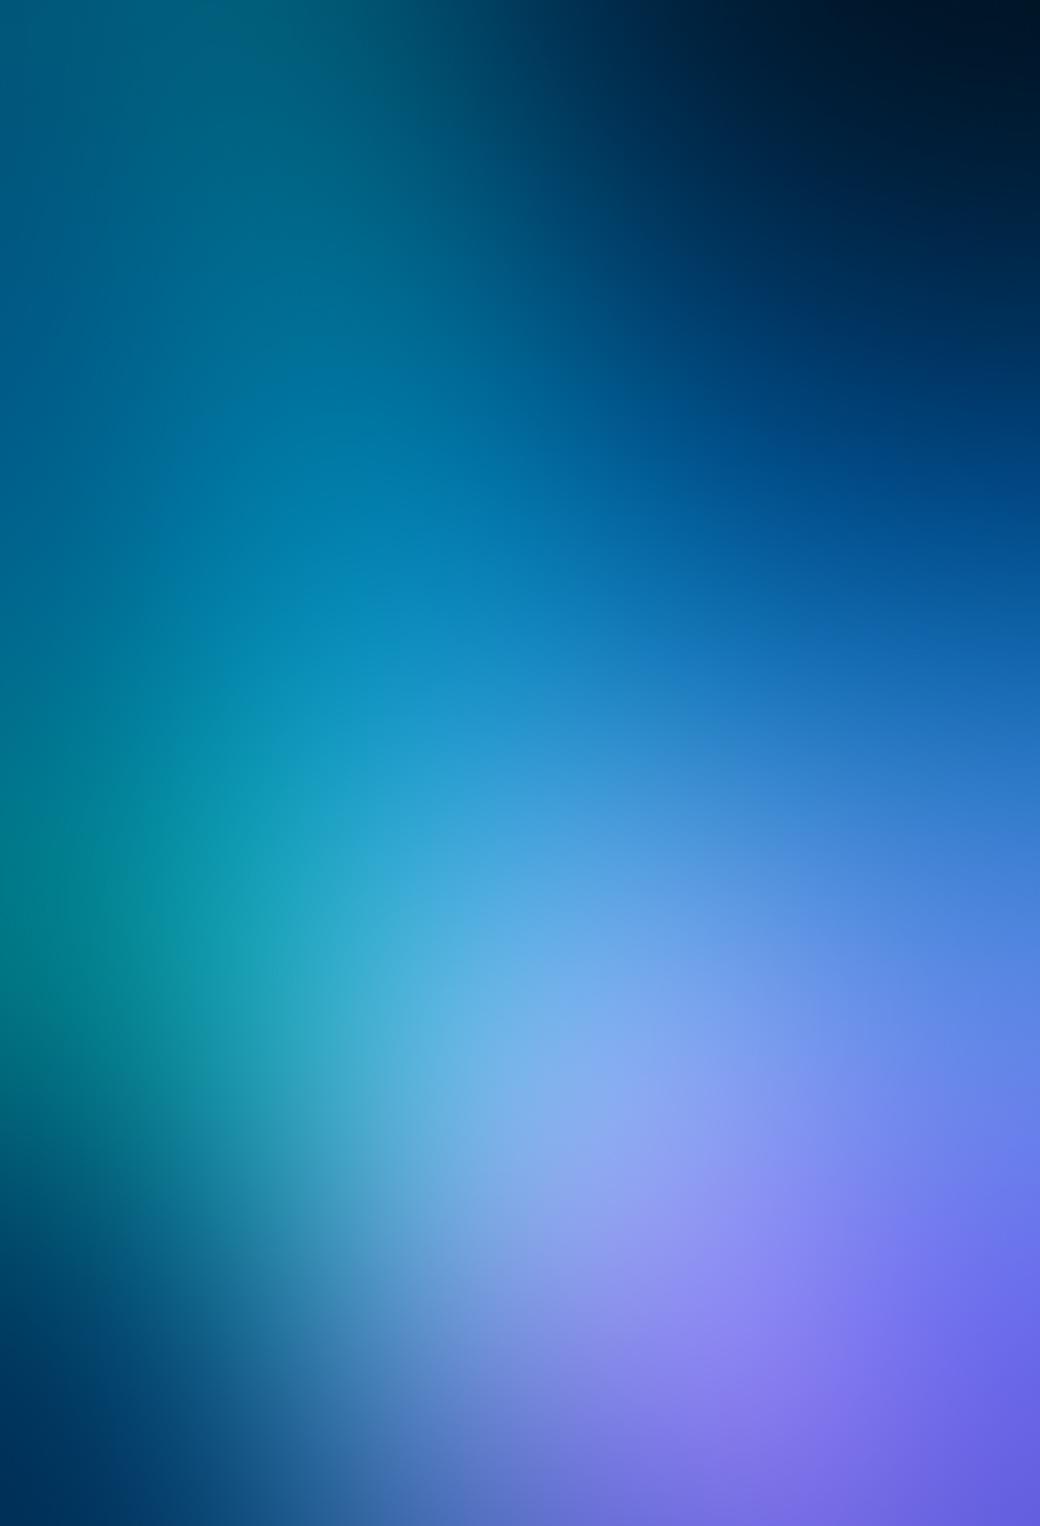 Soft Blue Gradient Blur iOS7 iPhone 5 Wallpaper HD